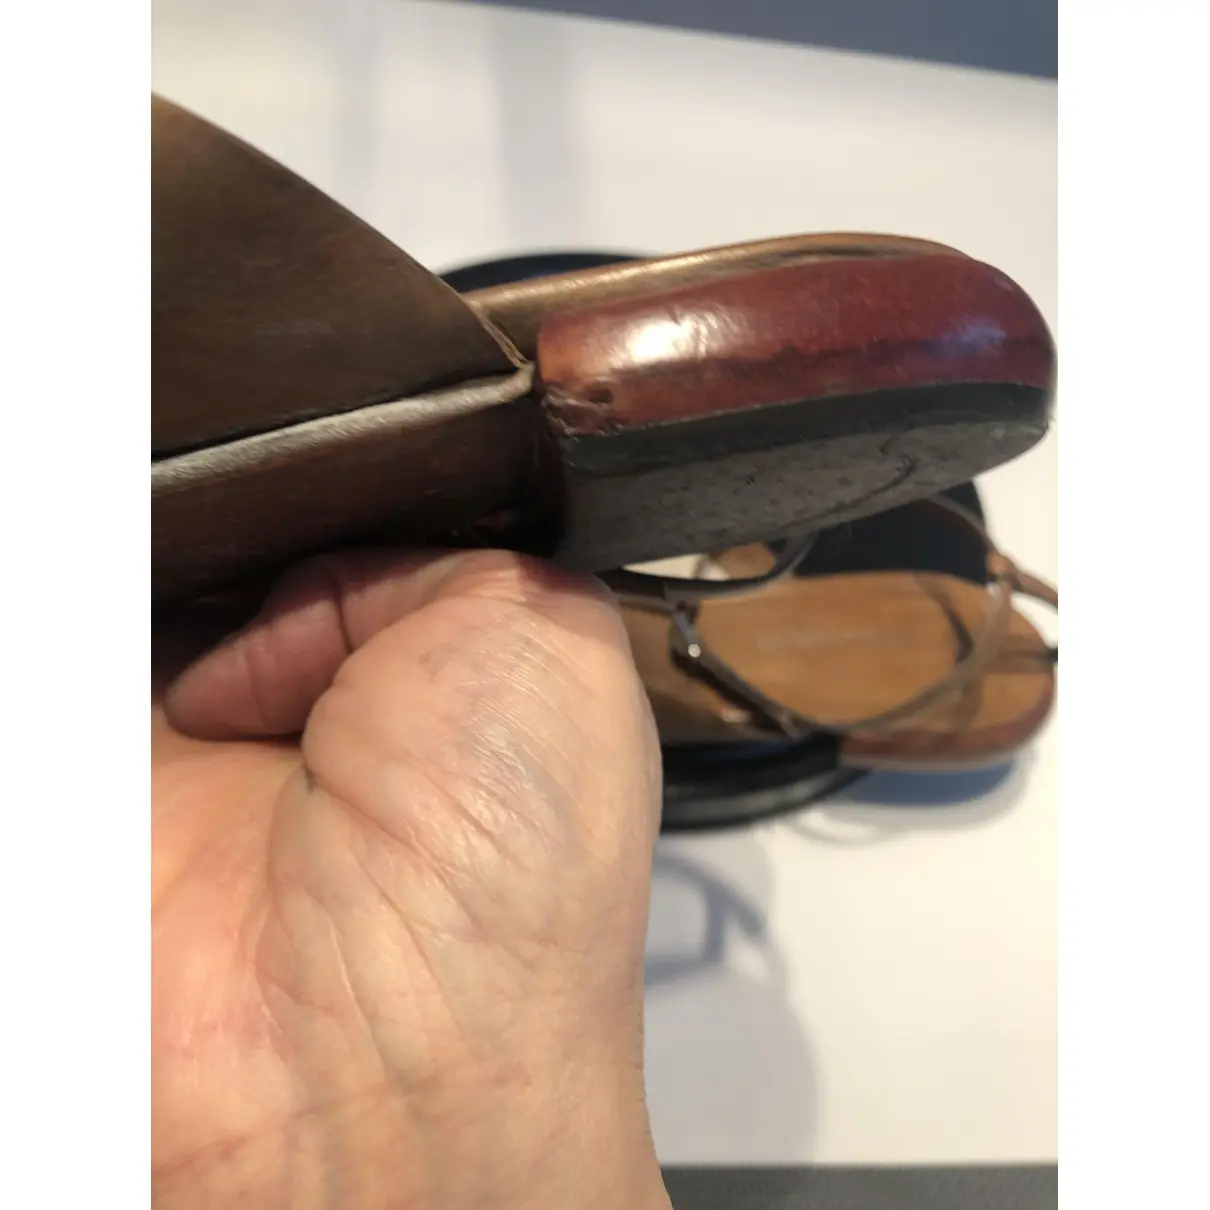 Buy Giorgio Armani Leather flats online